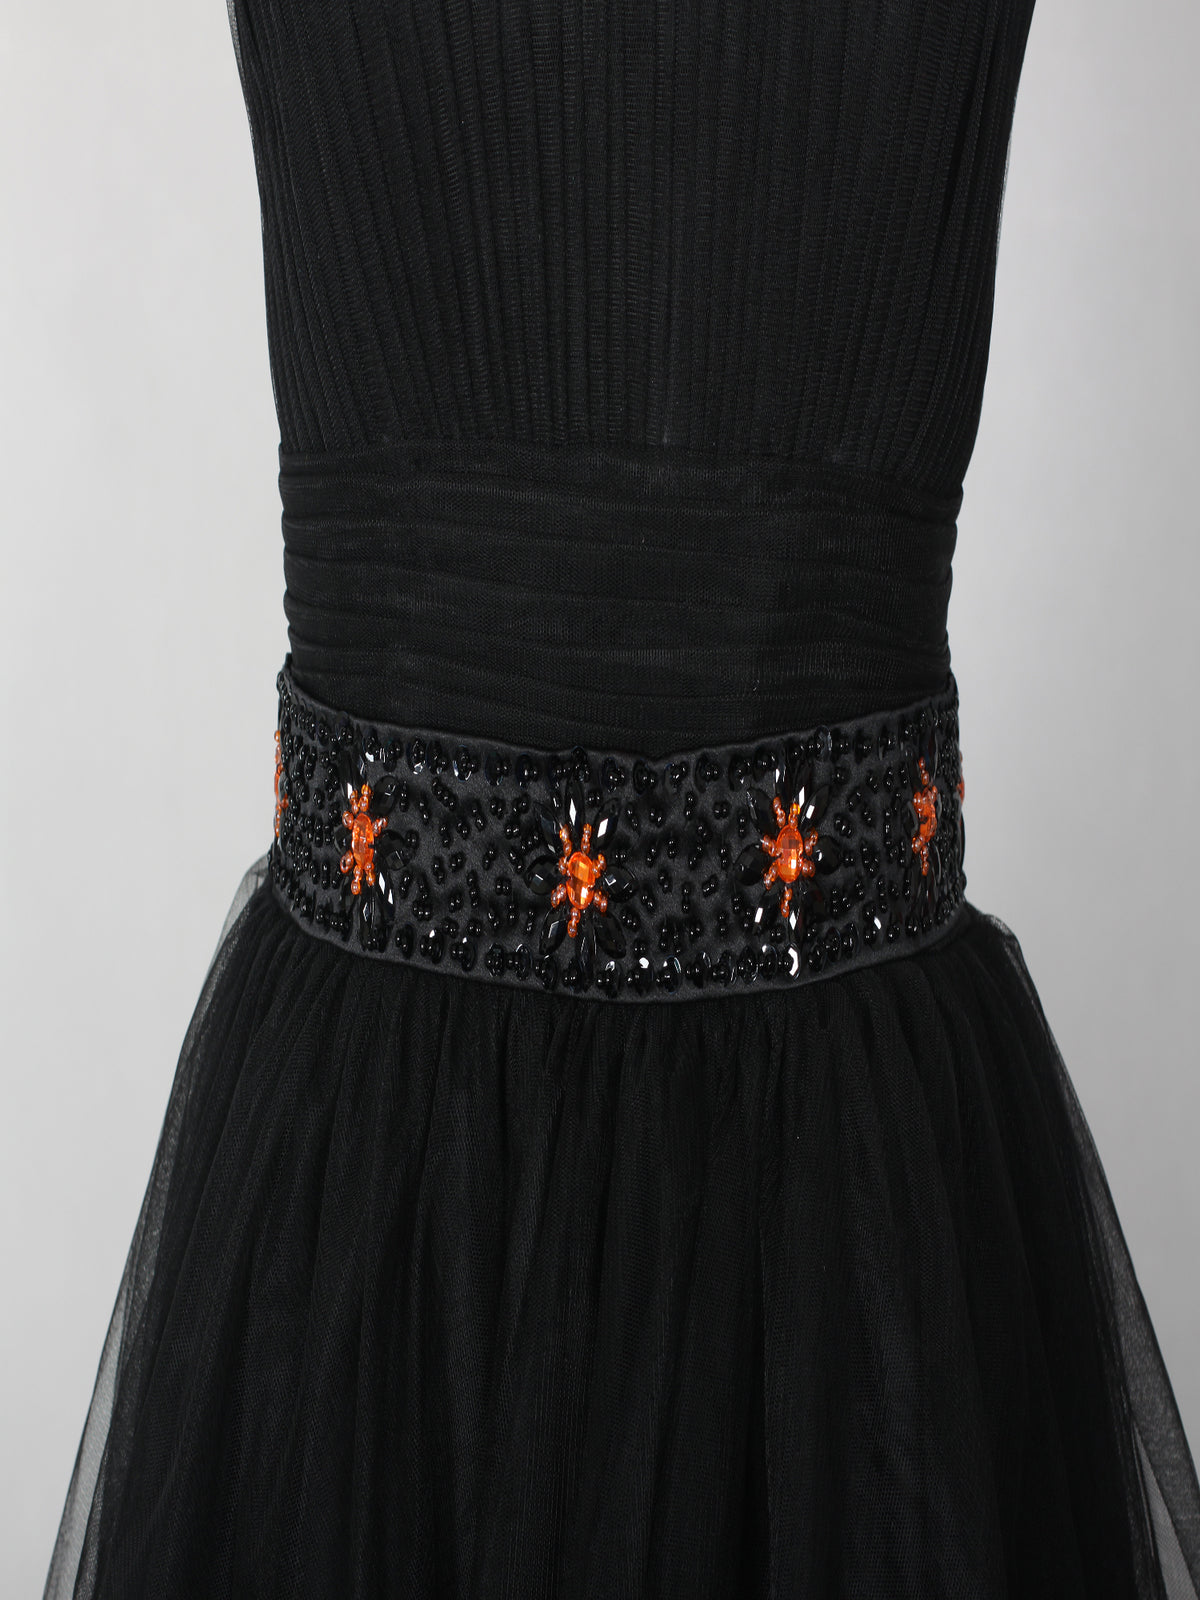 Black Spaghetti Strap Tulle Short Ball Gown Prom Dress